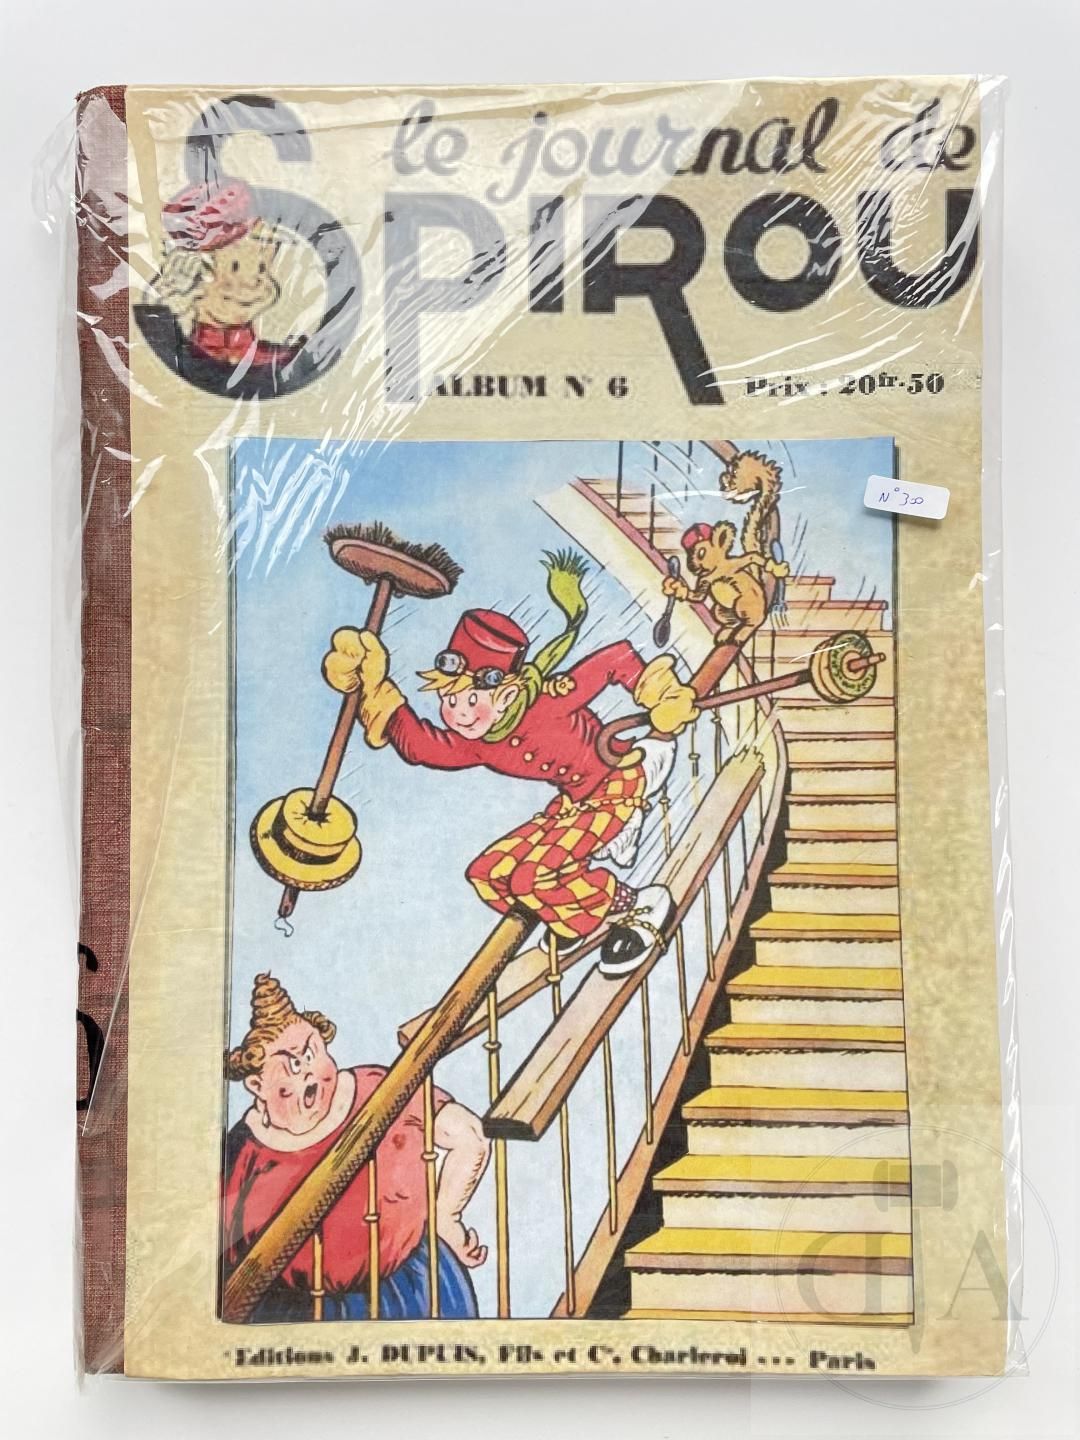 Null Le journal de Spirou/Reliure editeur n°6 del 1940. Completo in buone condiz&hellip;